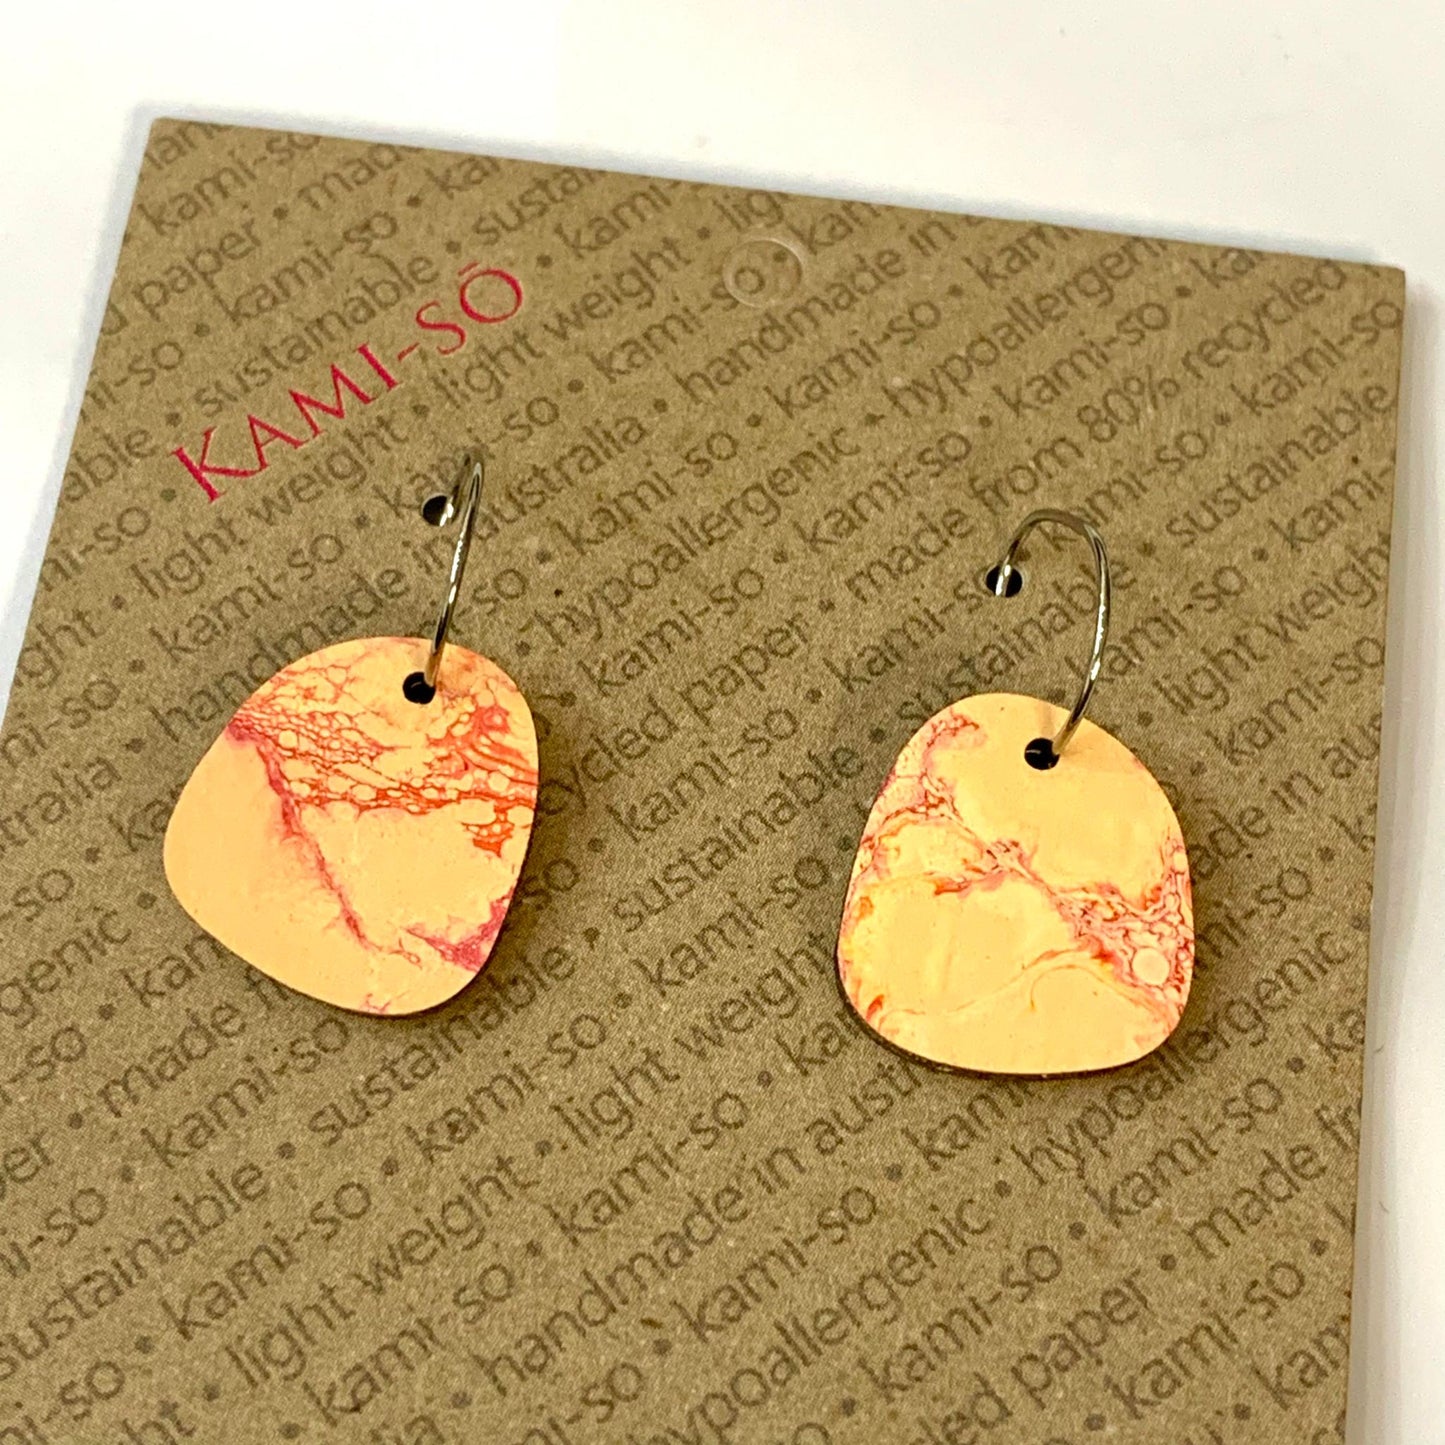 KAMI-SO- Recycled Paper Earrings - Mini Square Recycled Paper Earrings - Pink & Peach